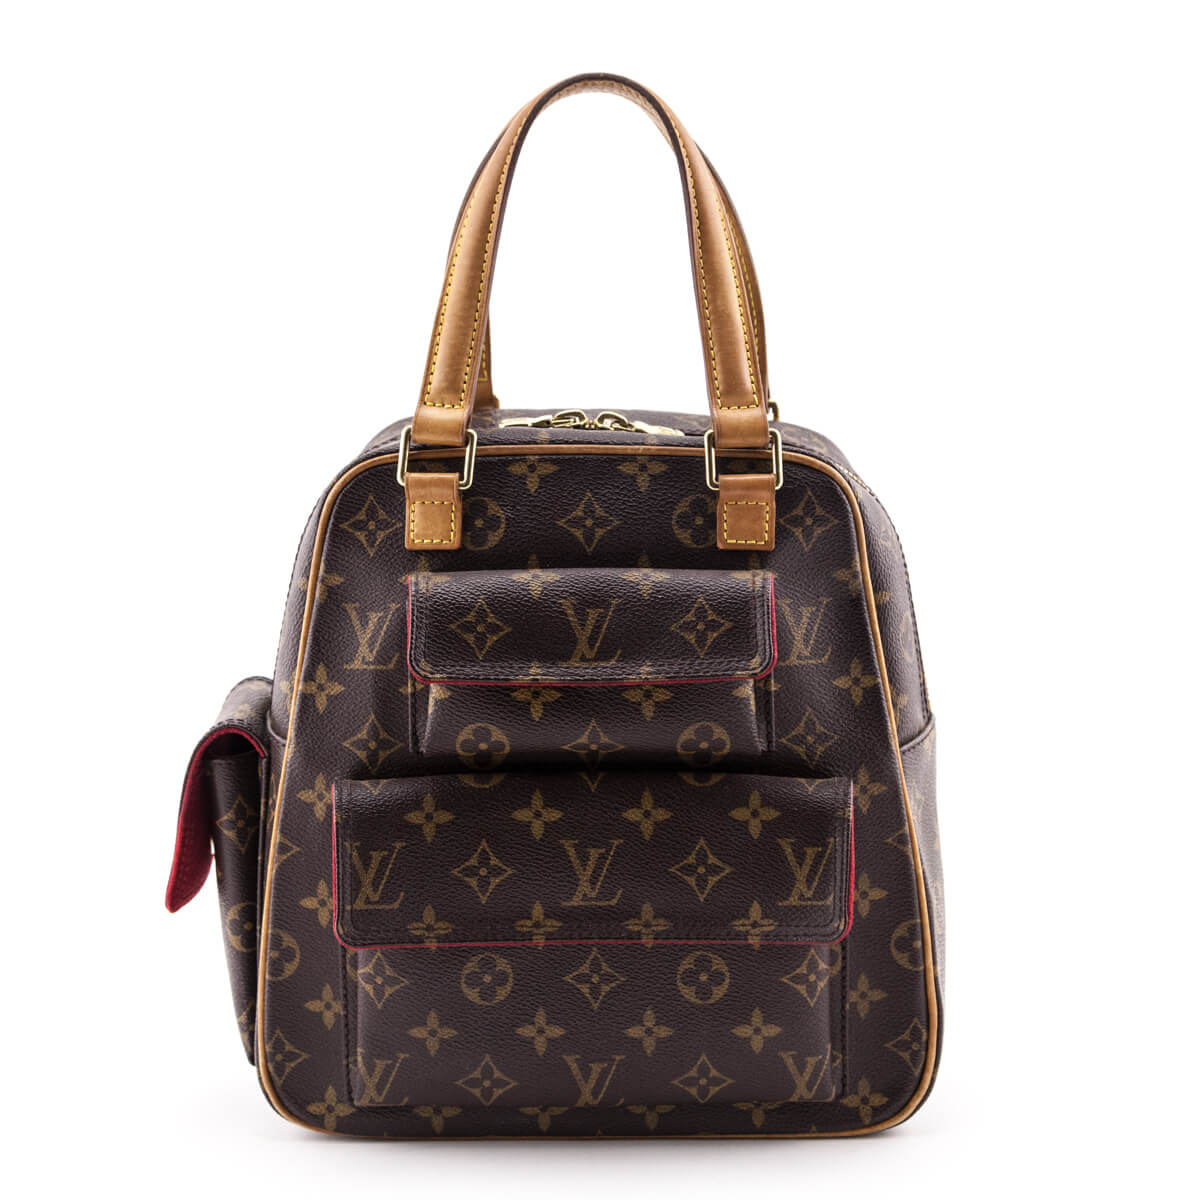 Authentic Louis Vuitton Bags -  Canada